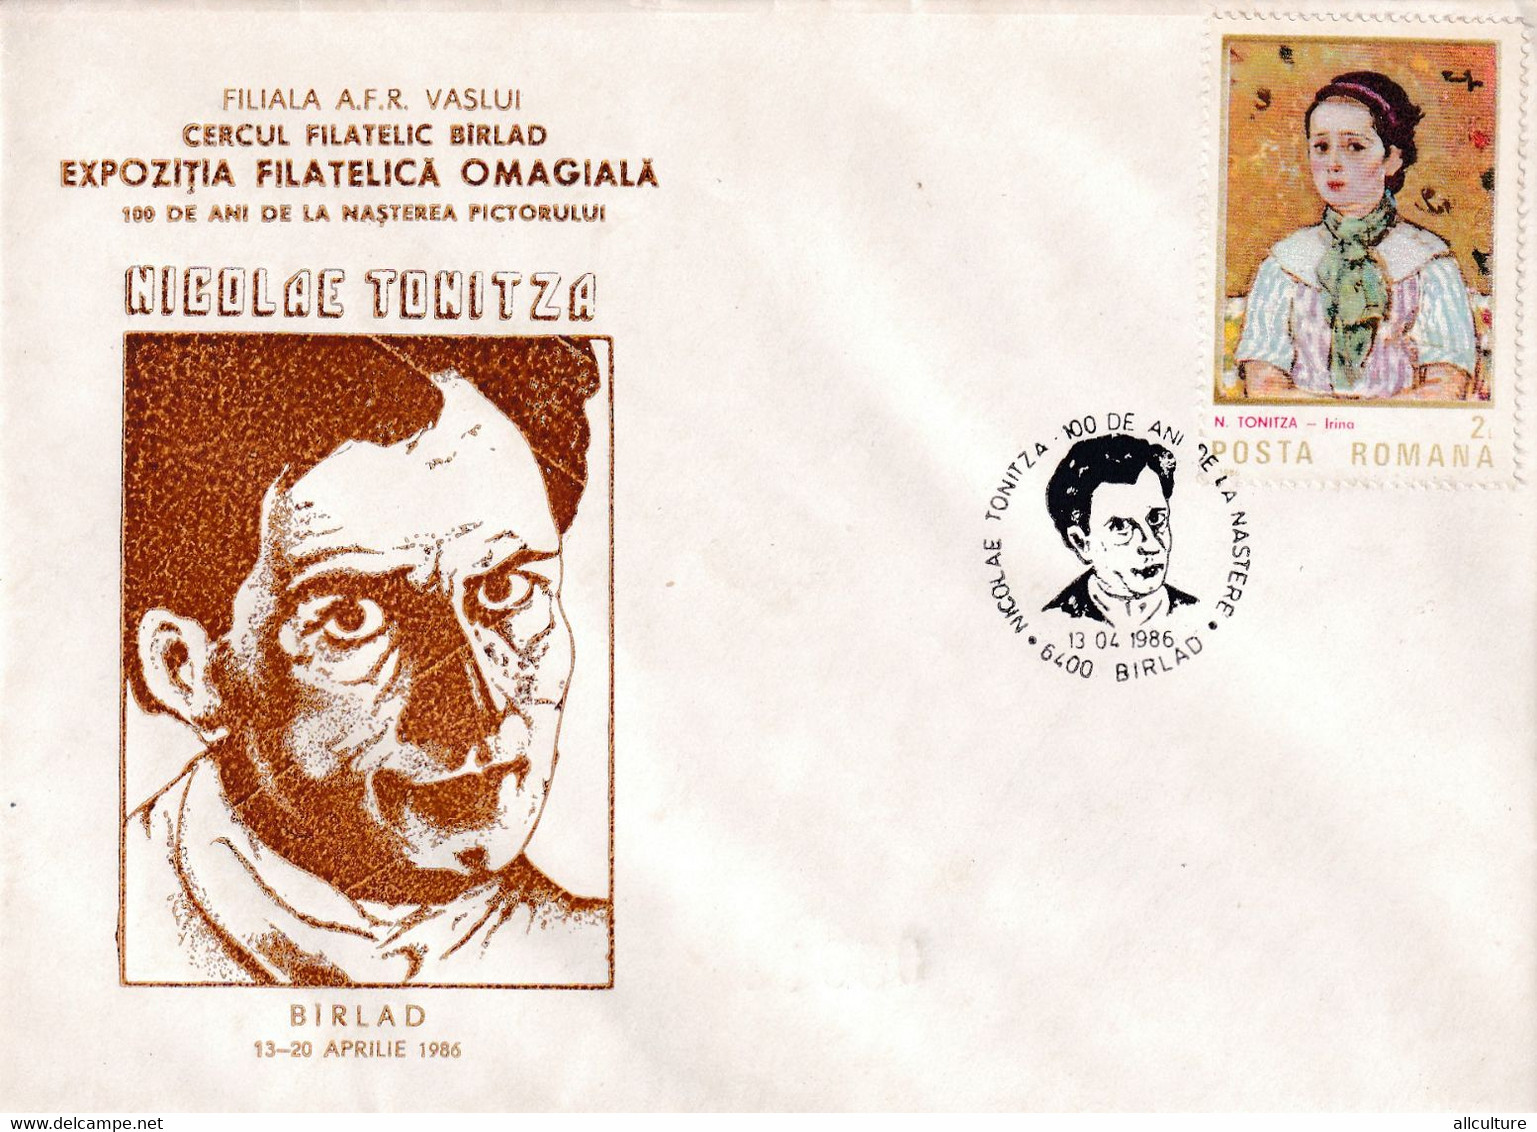 A2997 - Nicolae Tonitza, Pictor Roman, Expozitia Filatelica Omagiala, Vaslui Barlad 1986 Romania Posta Romana - Lettres & Documents